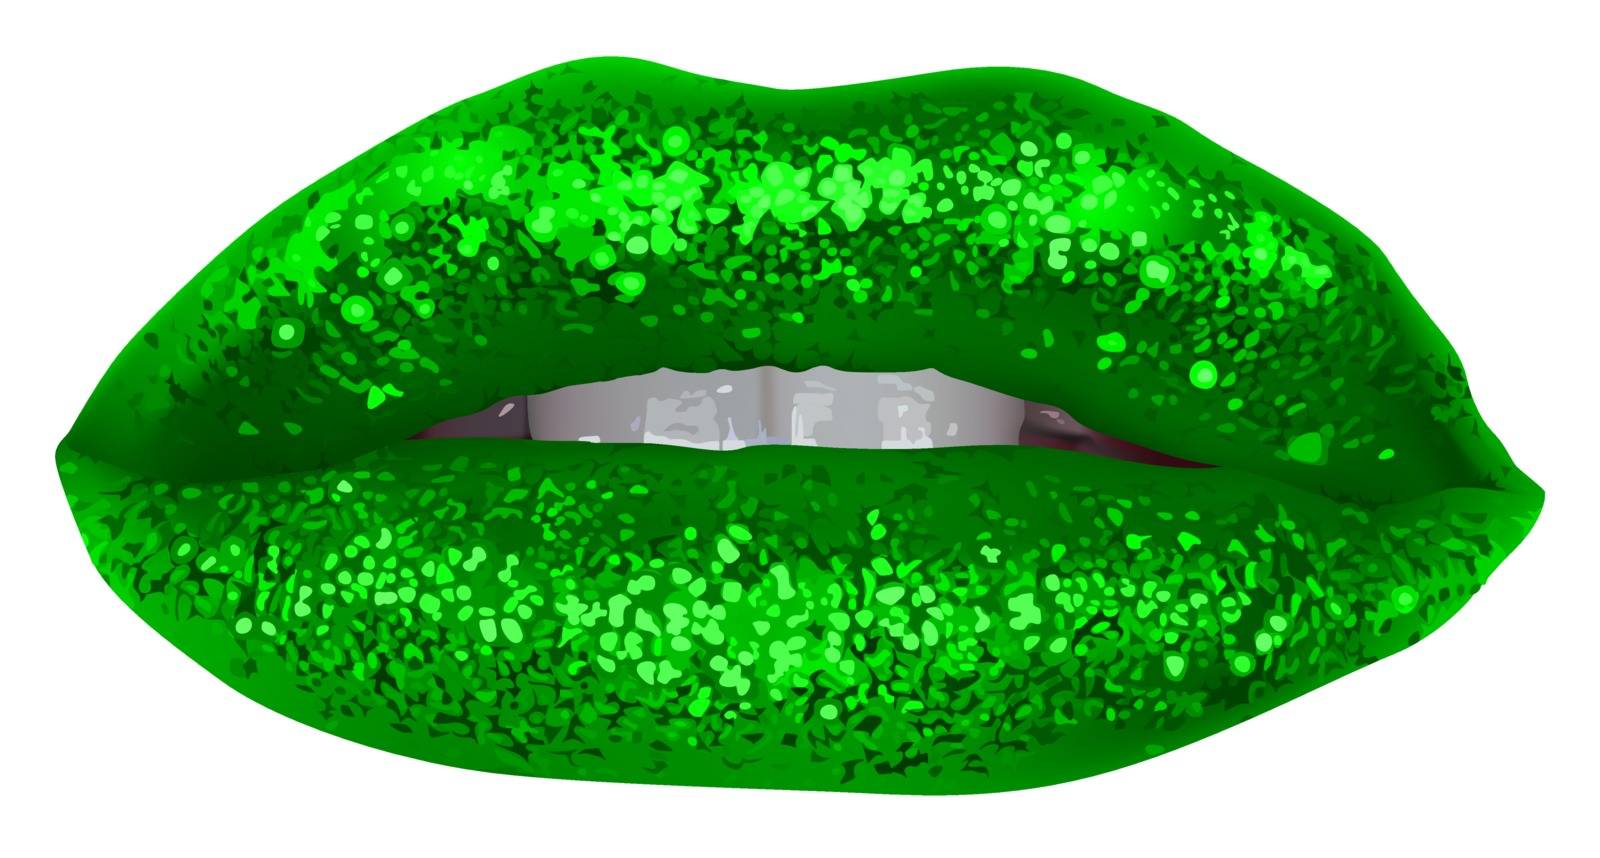 Green Lips with Glitter by illustratorCZ